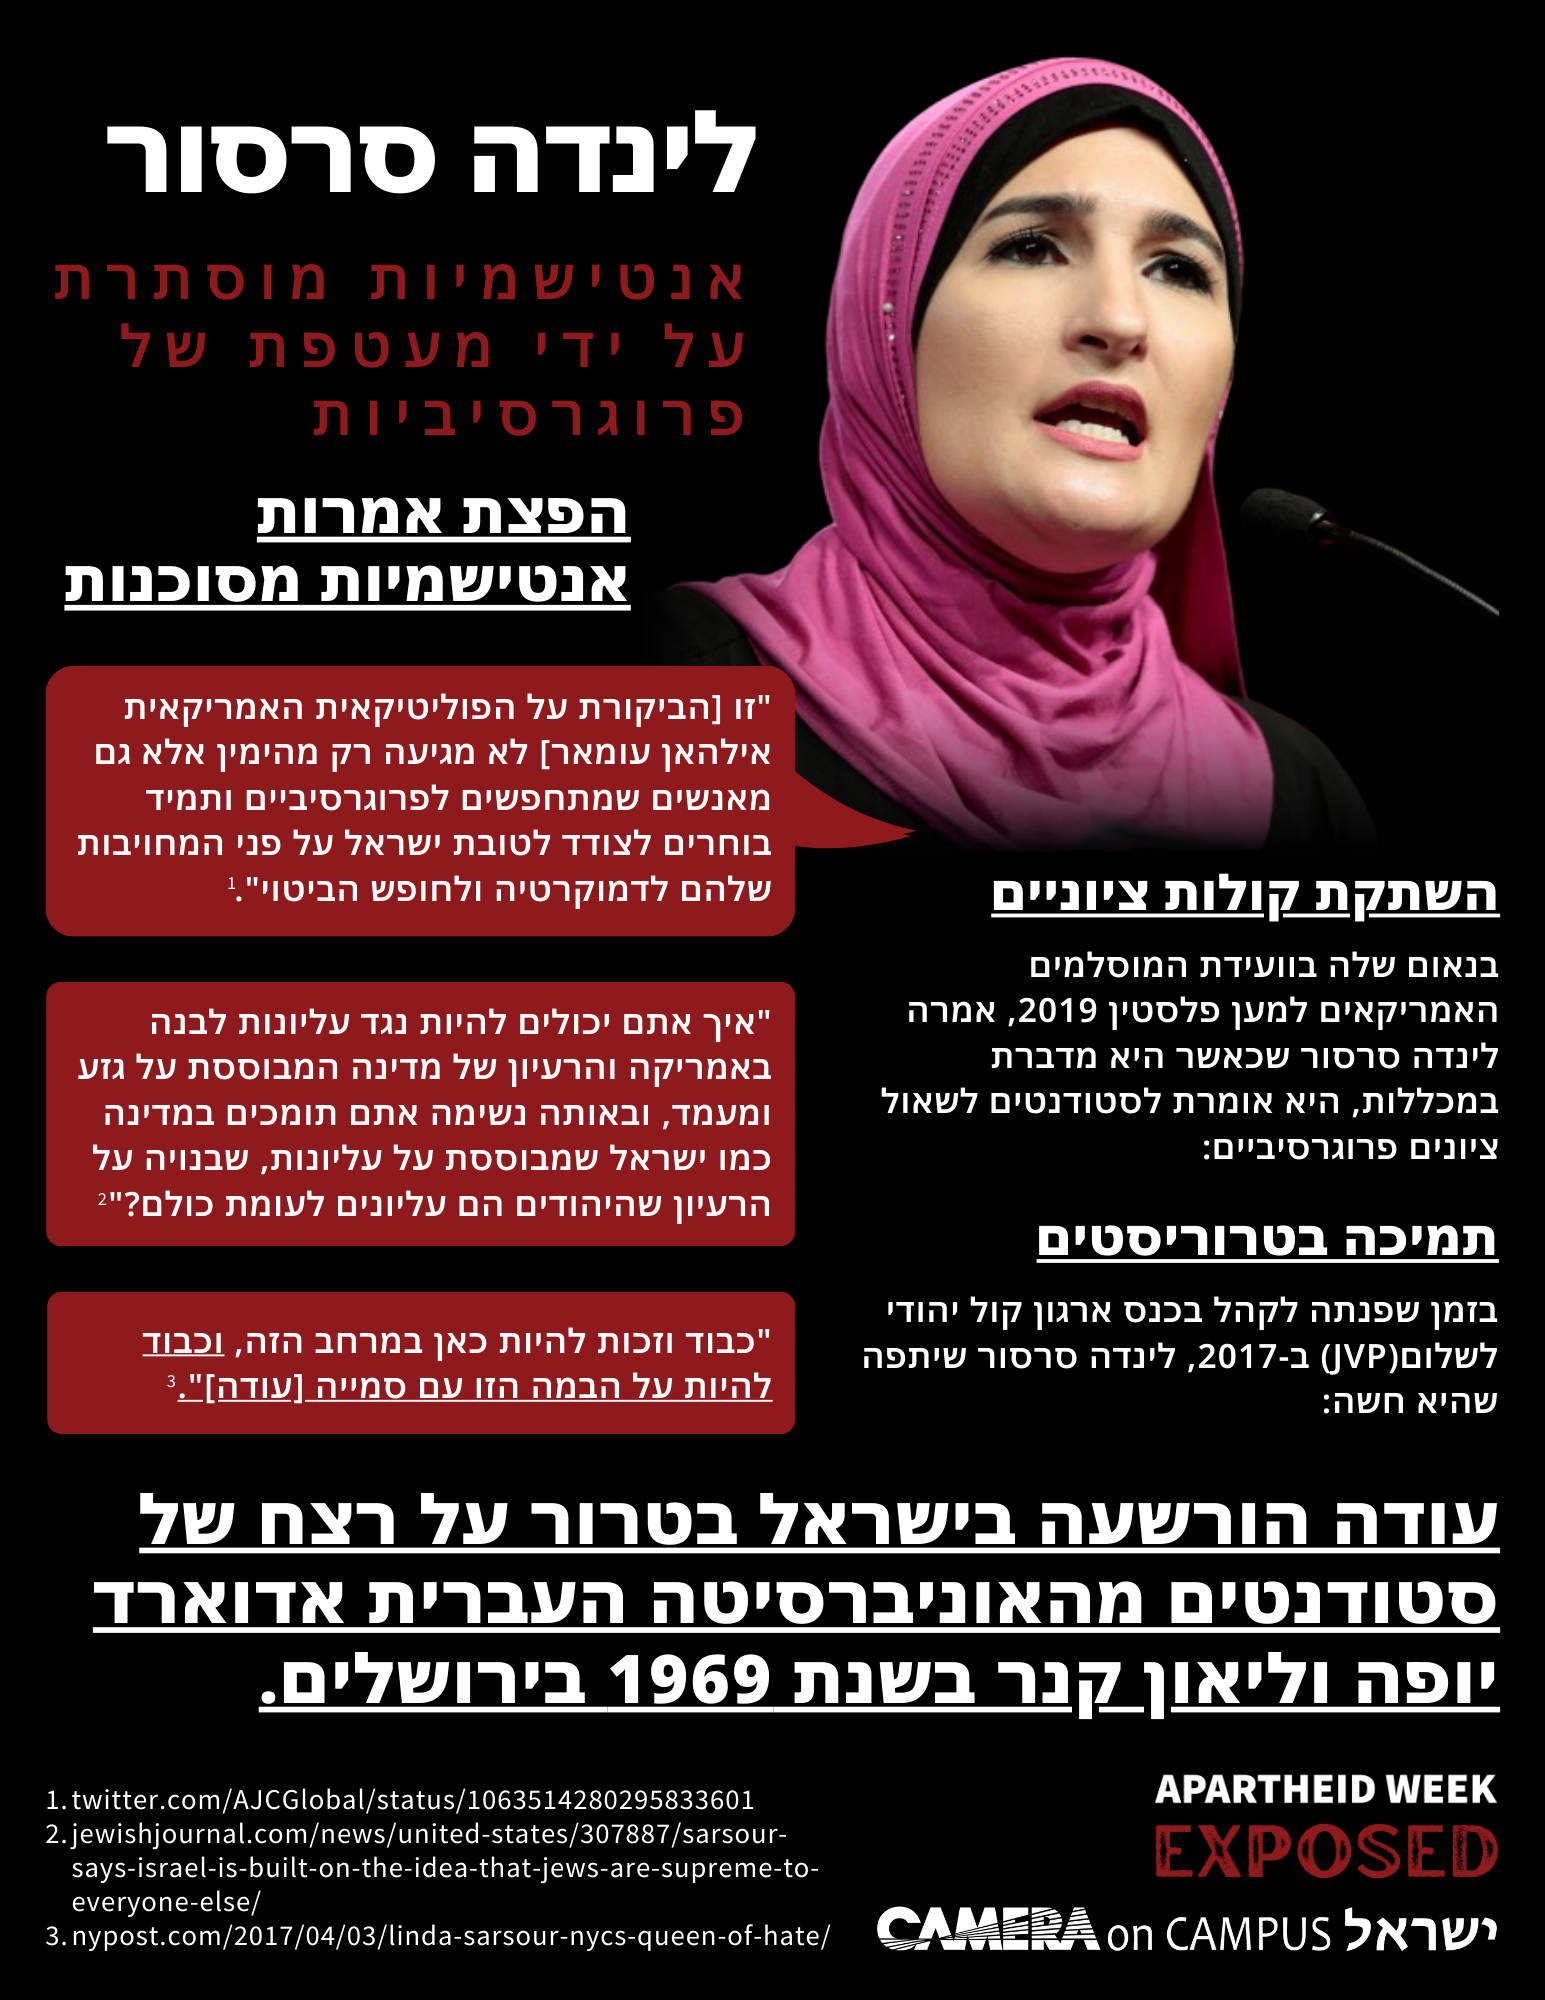 Hebrew version 2023 apartheid week exposed infographic linda sarsour